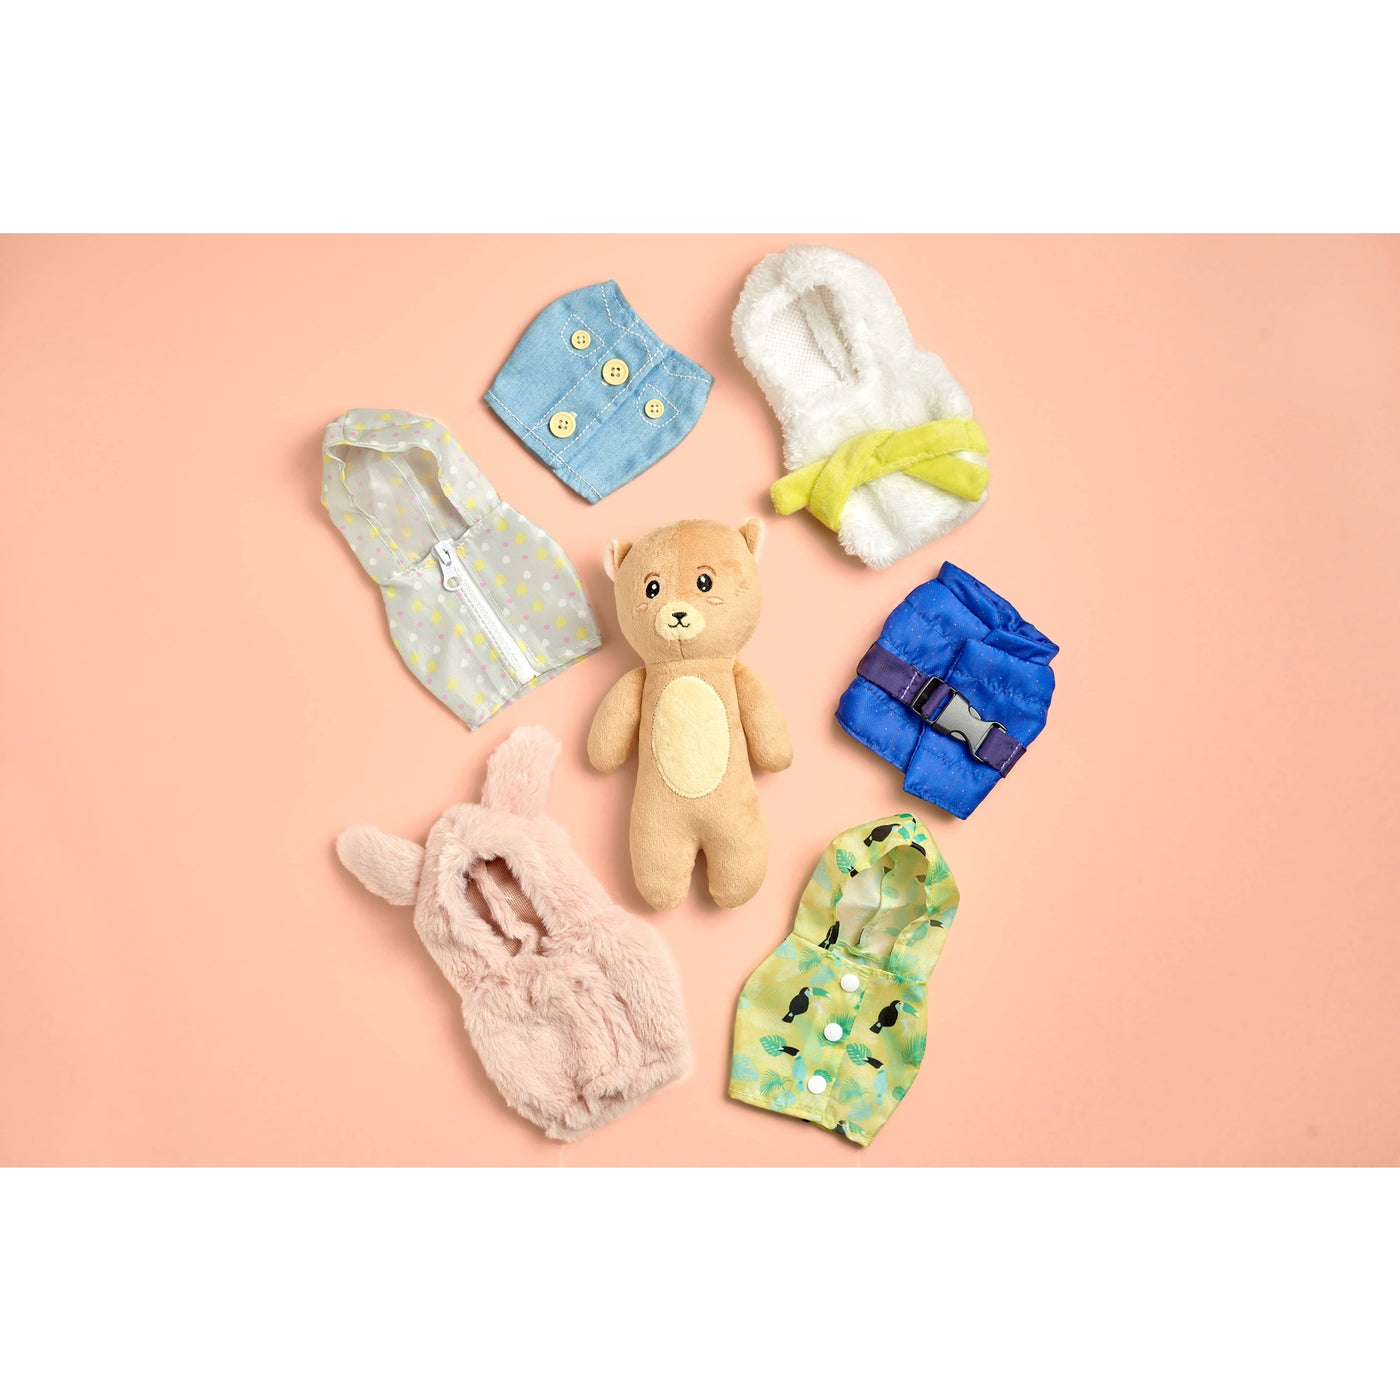 Soft Activity Book - The Kiddy Bear - Montessori Dress Up Plush